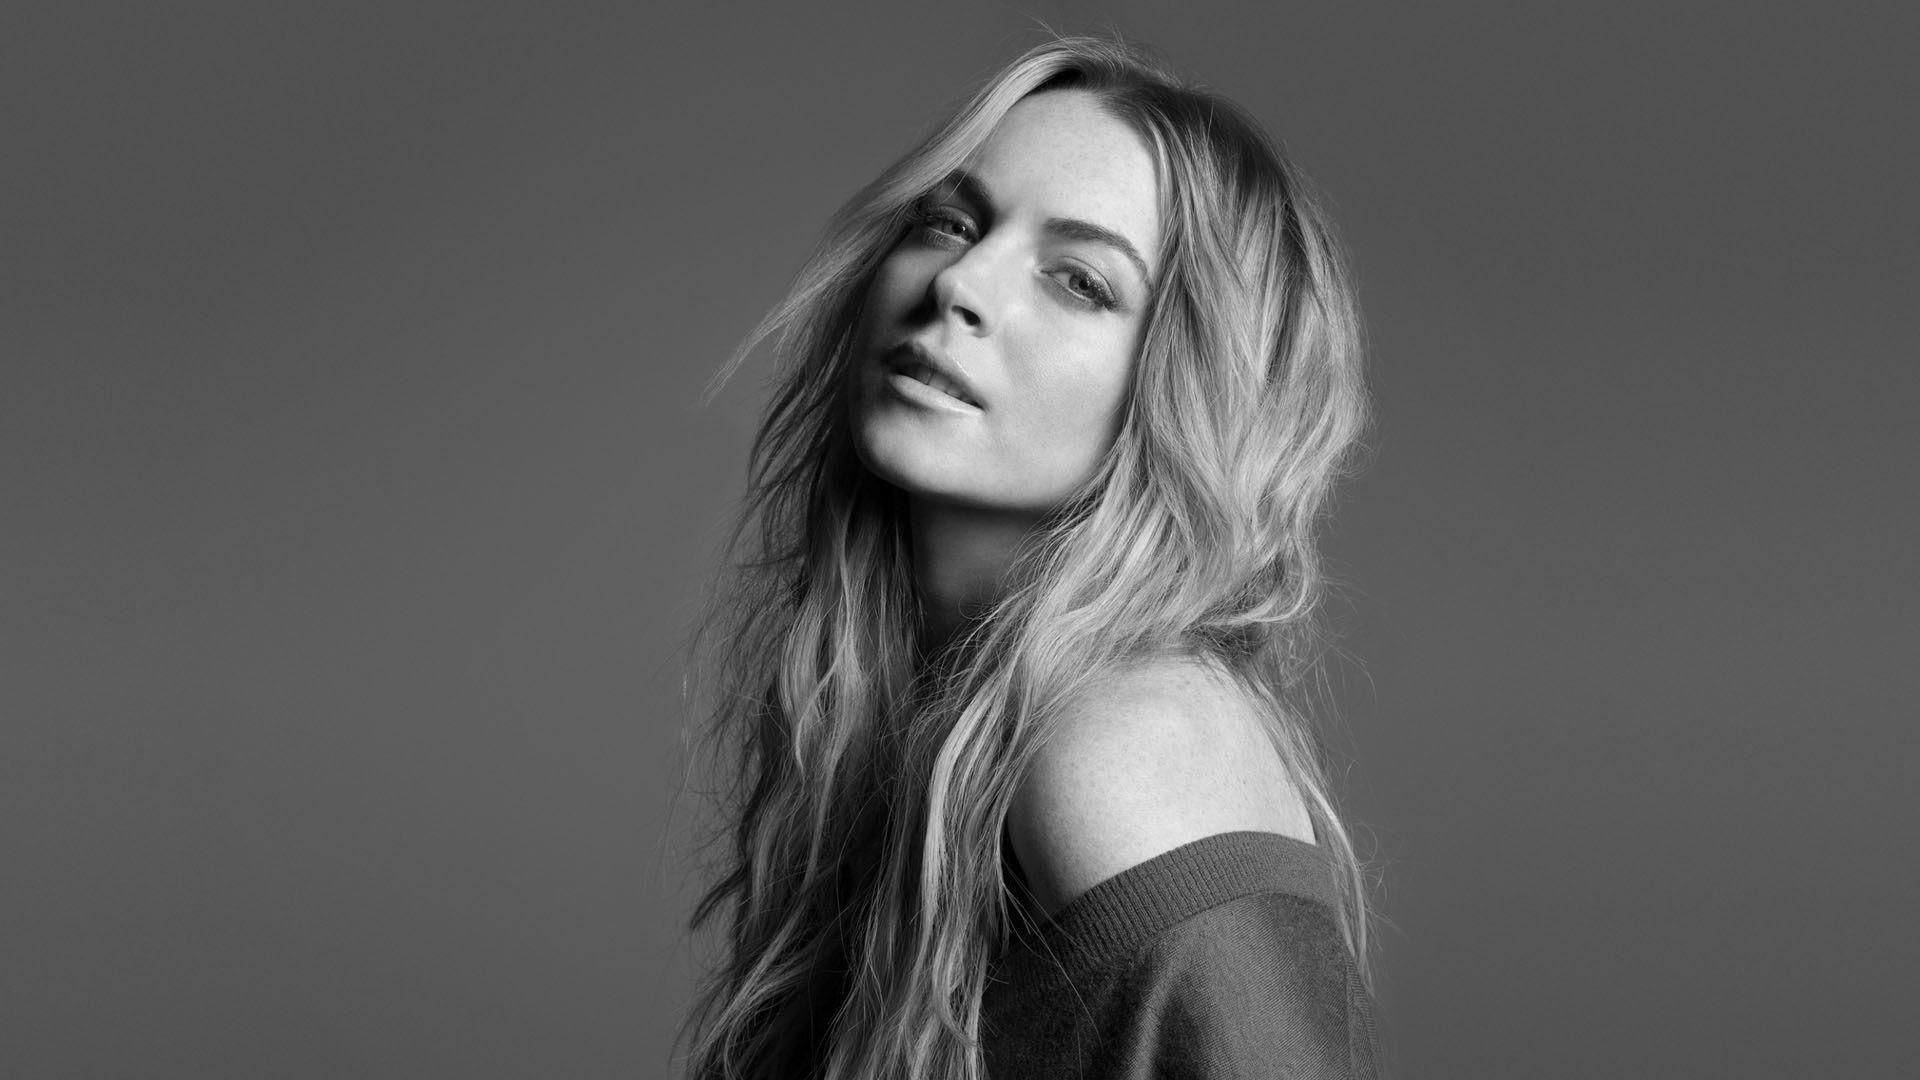 Lindsay Lohan Wallpaper HD